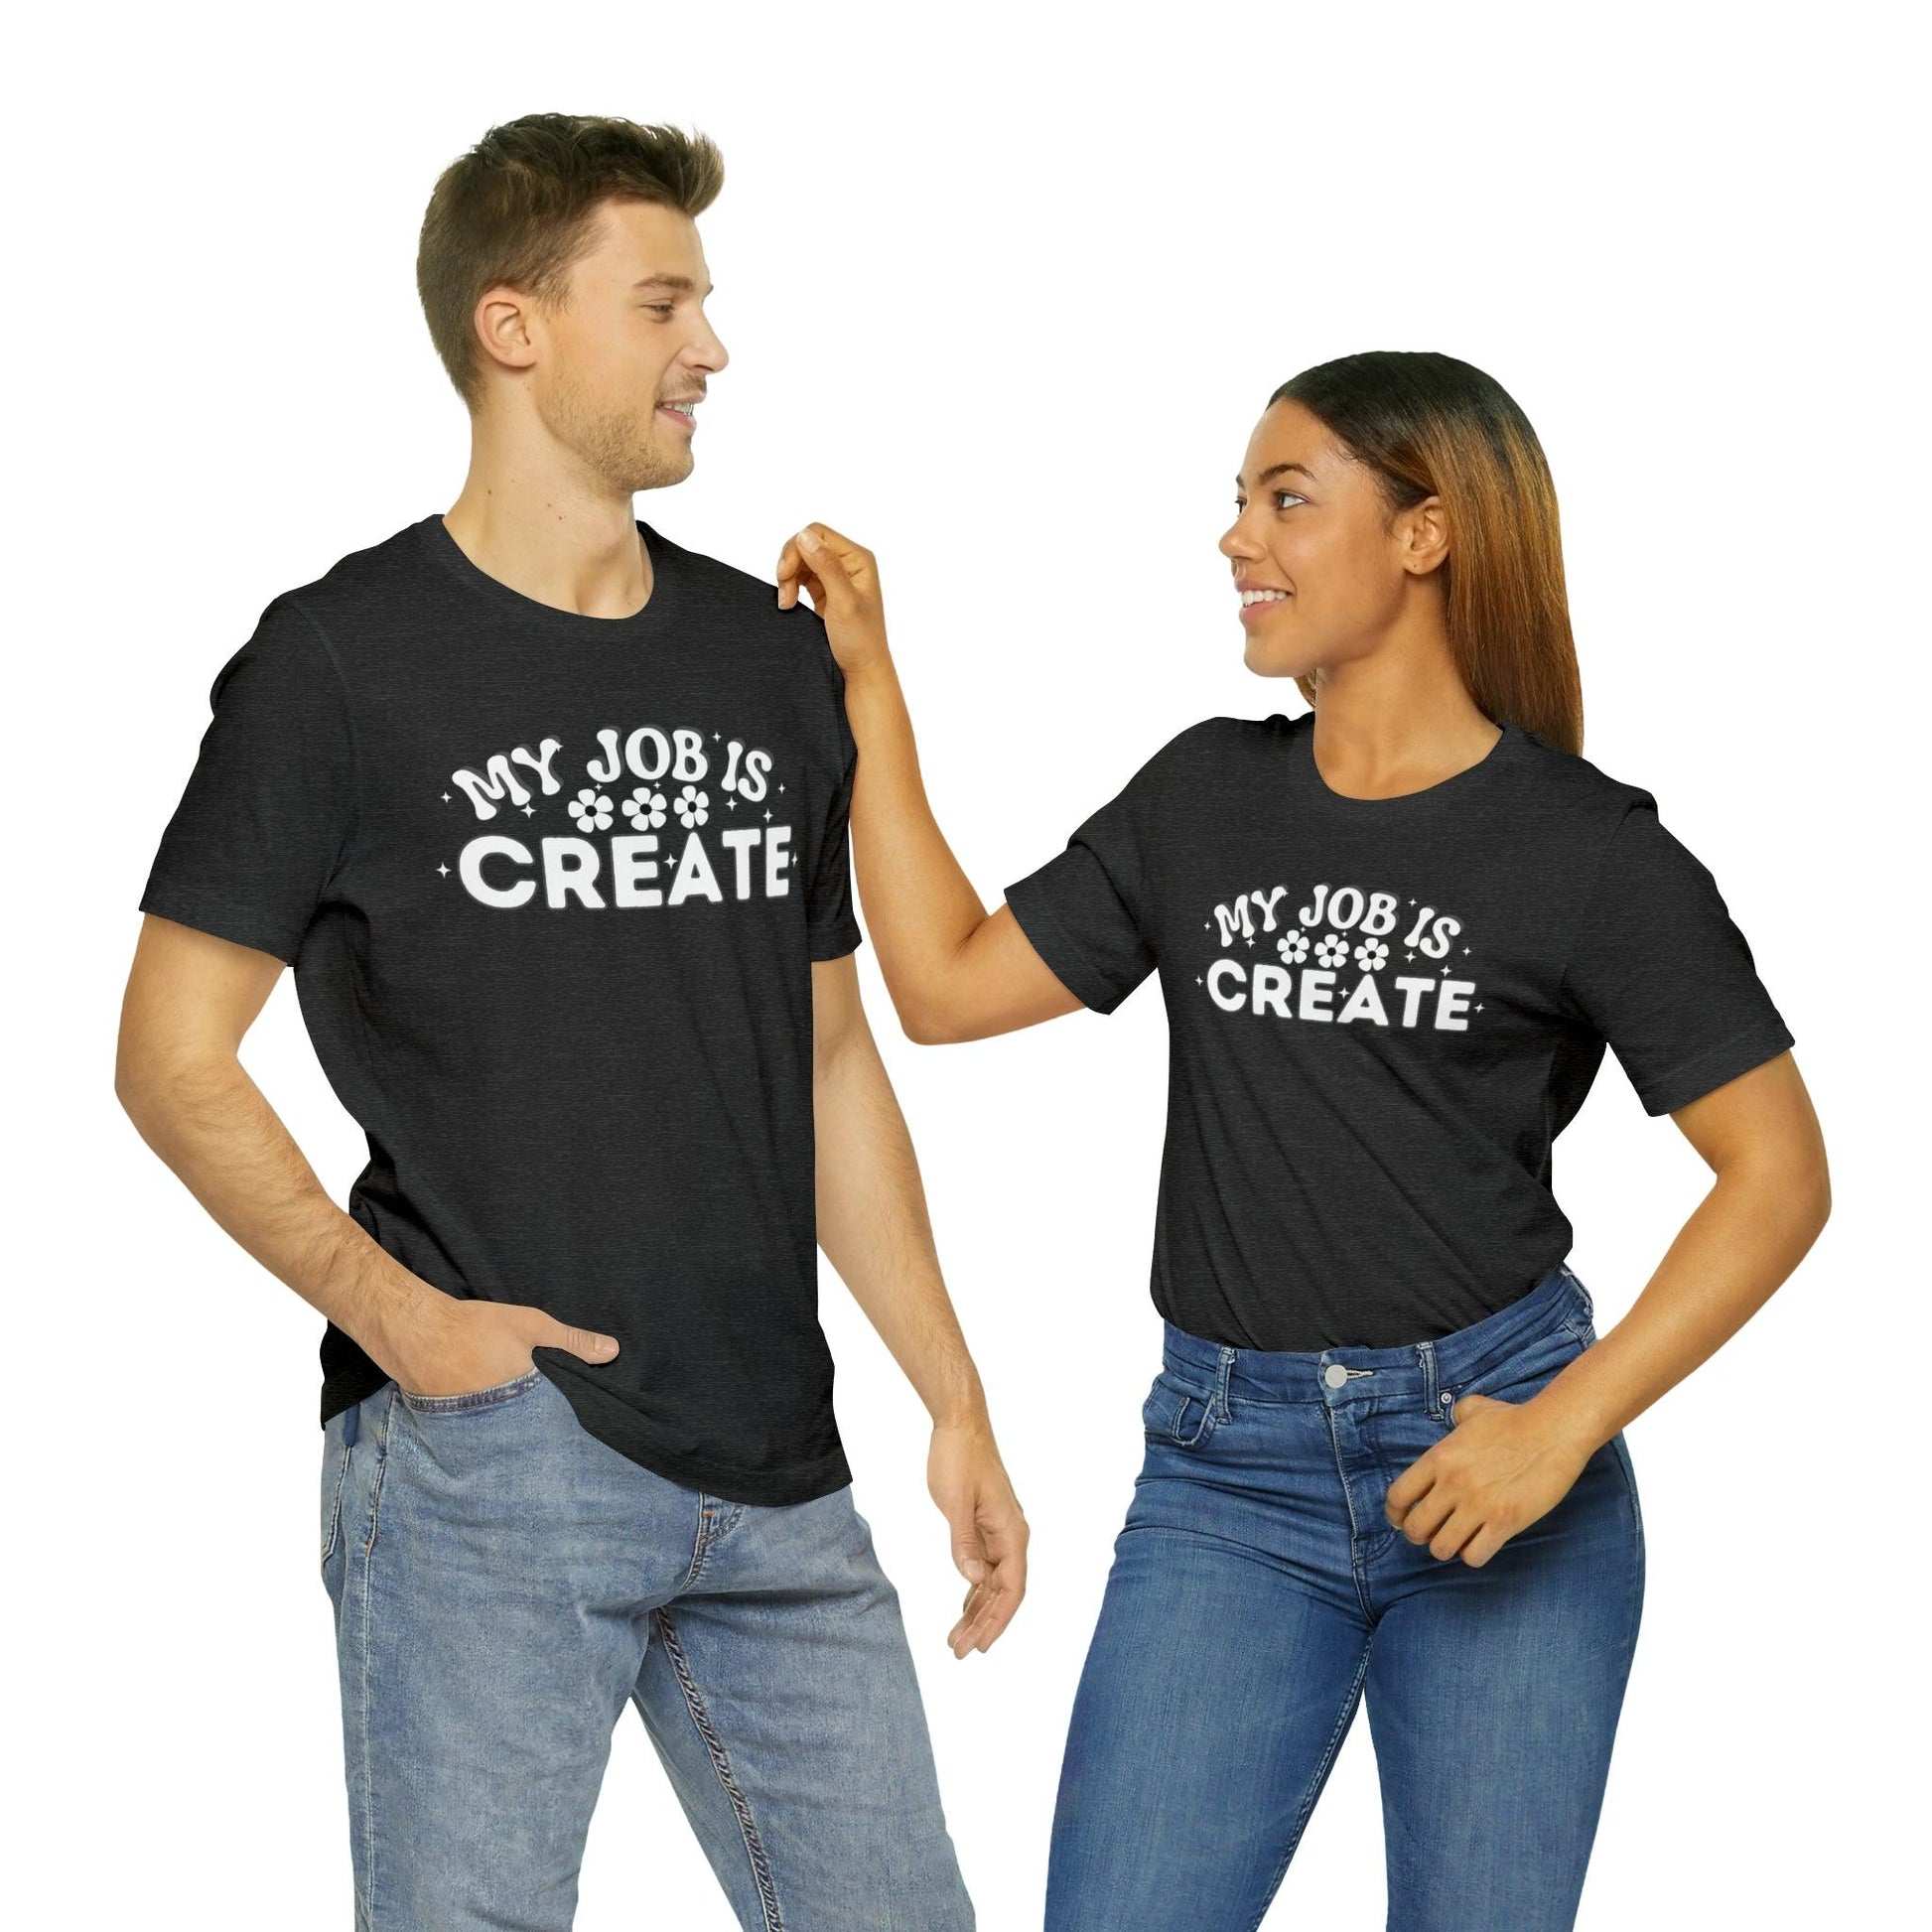 My Job is Create Shirt Artist Shirt, Artist shirt, Designer shirt, writers, Musician Actors Entrepreneur Engineer Scientist Teachers Healthcare professionals Content Creator Shirt - Giftsmojo